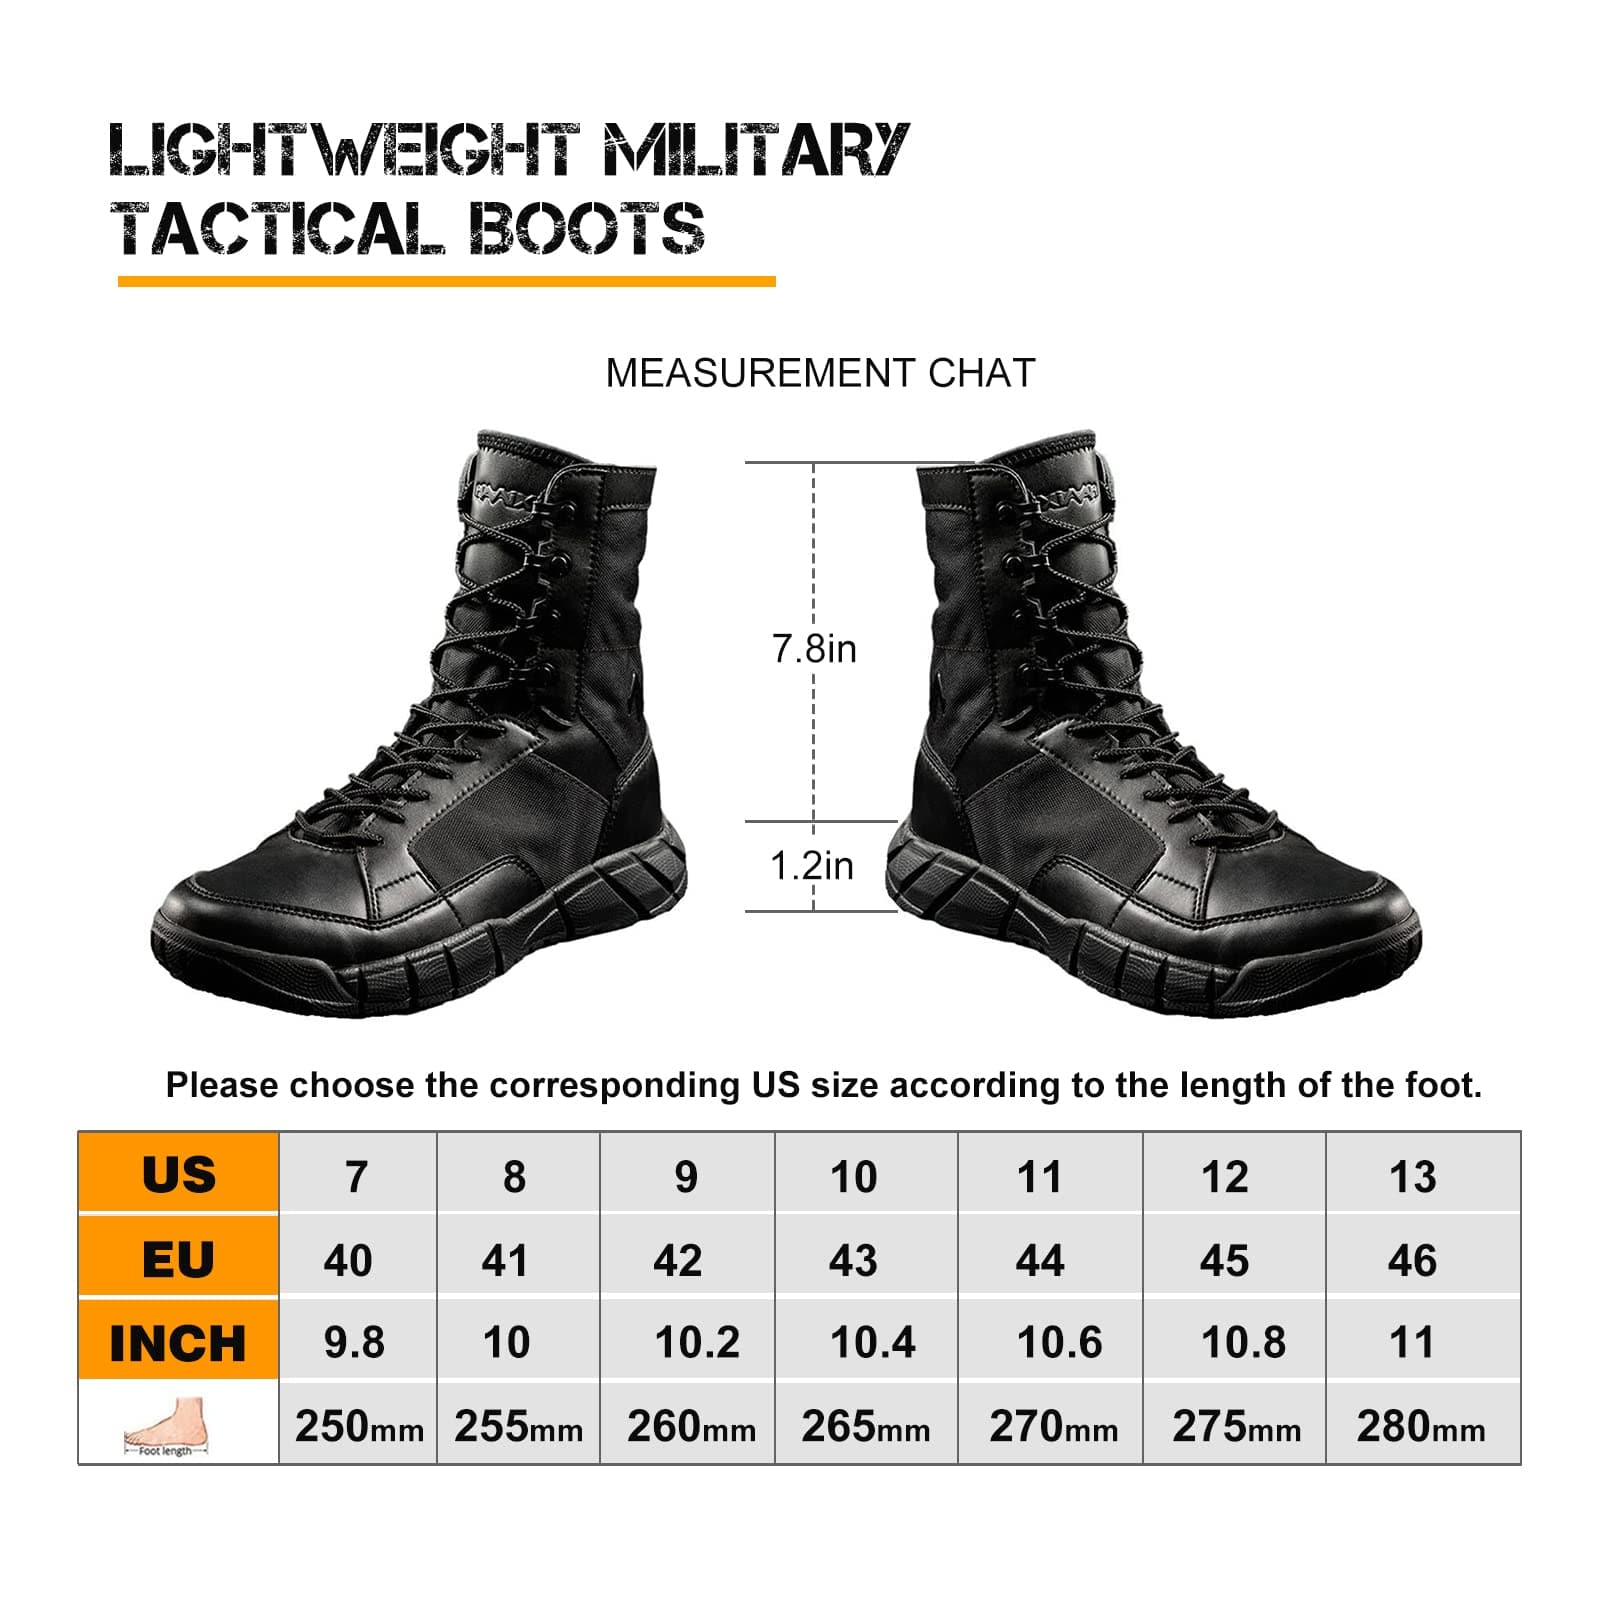 8" Waterproof Boots For Jungle Desert - 208H